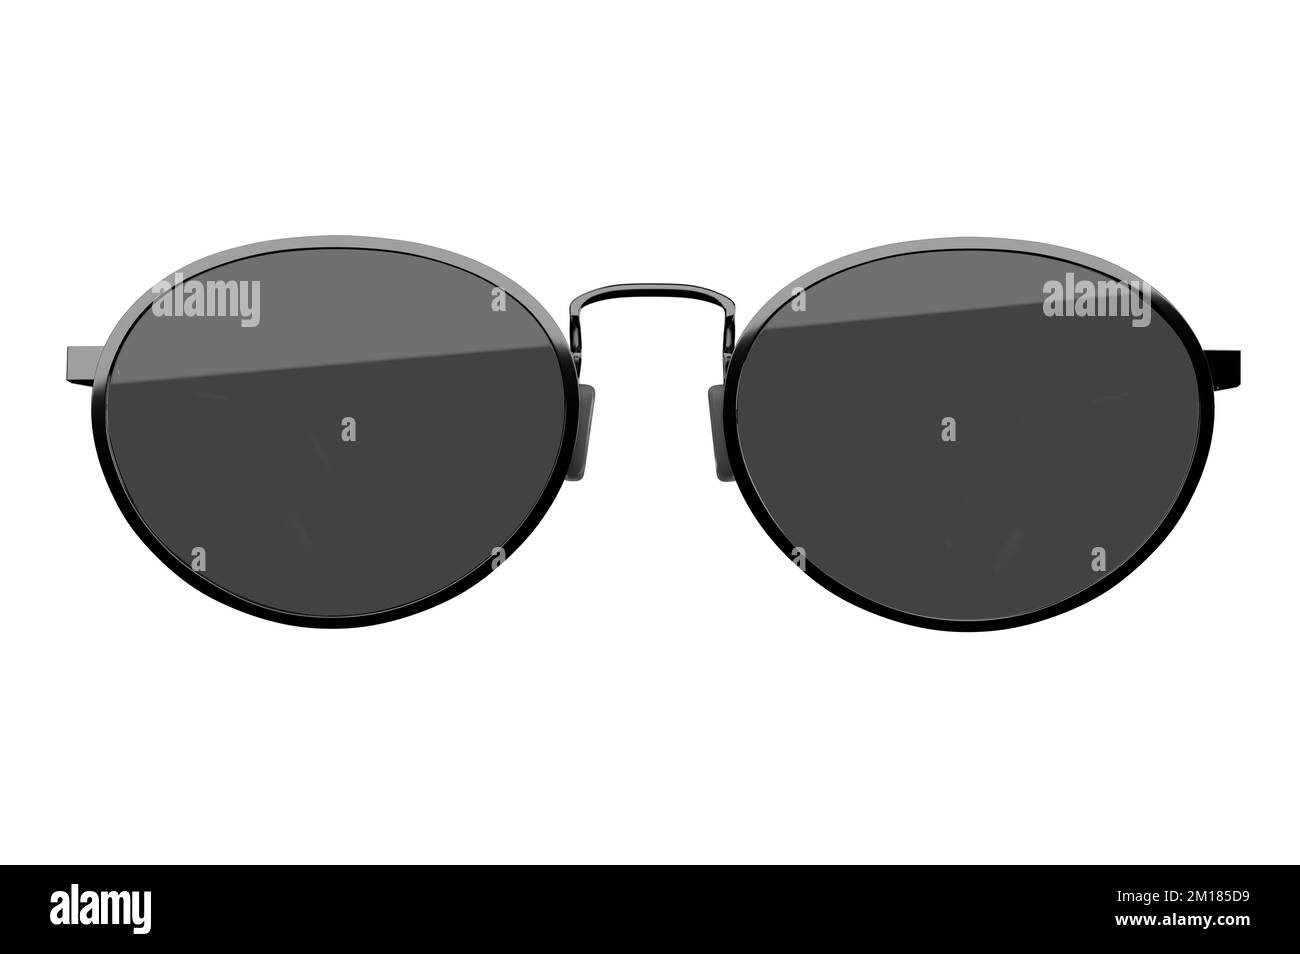 Black sunglasses isolated on white background. Black Shades sunglasses Front view. Black Fashion glasses style metal framed isolated on white Stock Photo